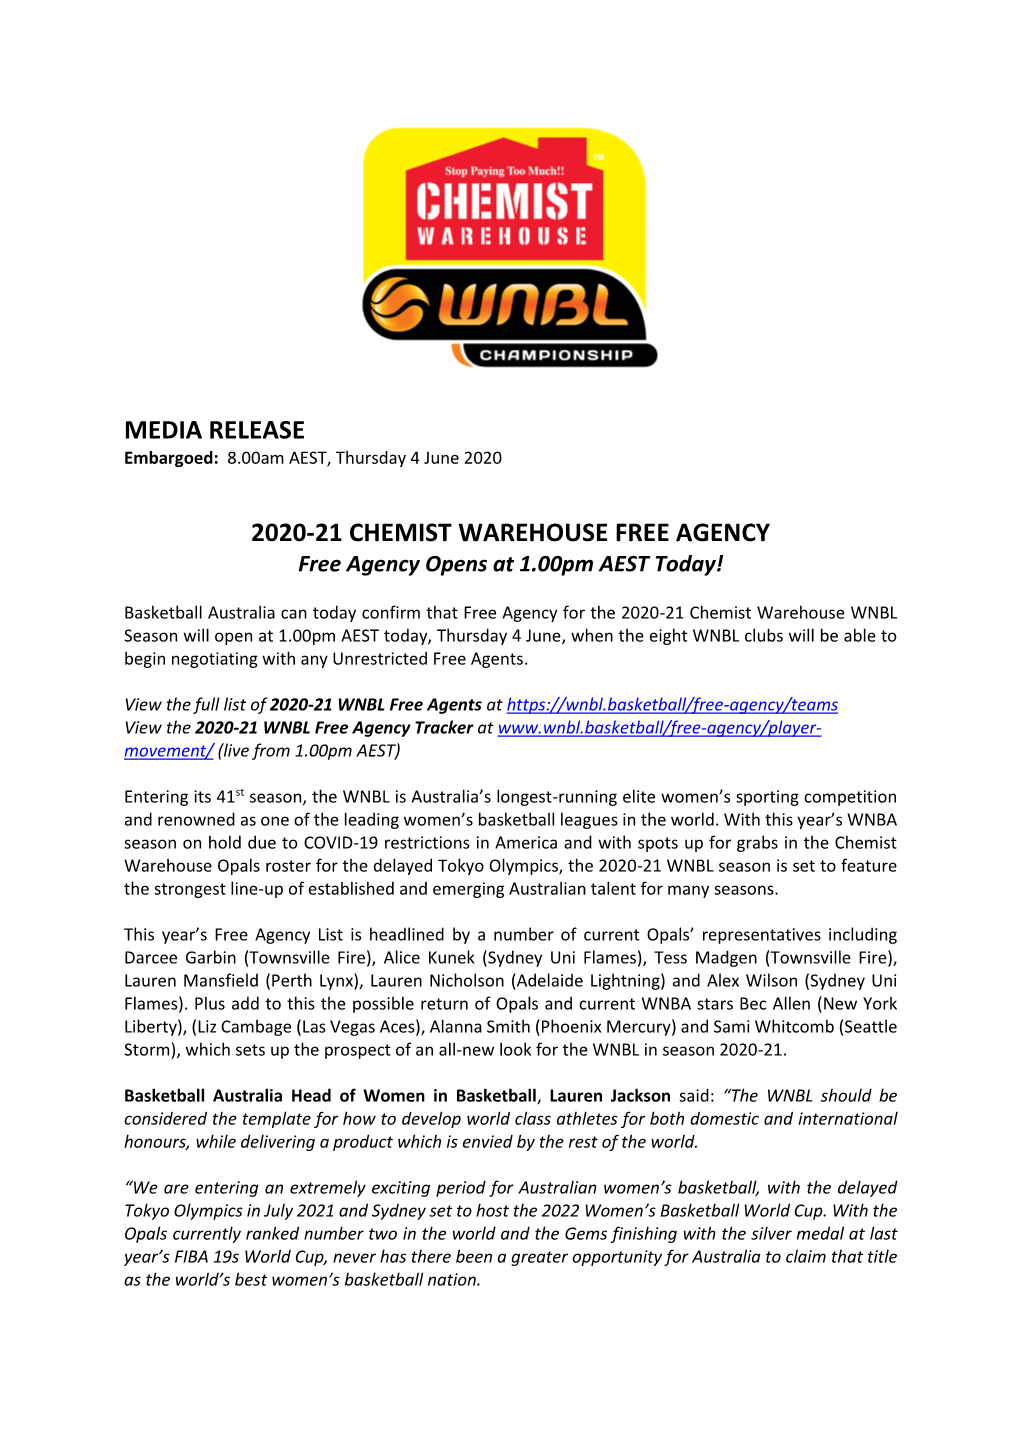 Media Release 2020-21 Chemist Warehouse Free Agency